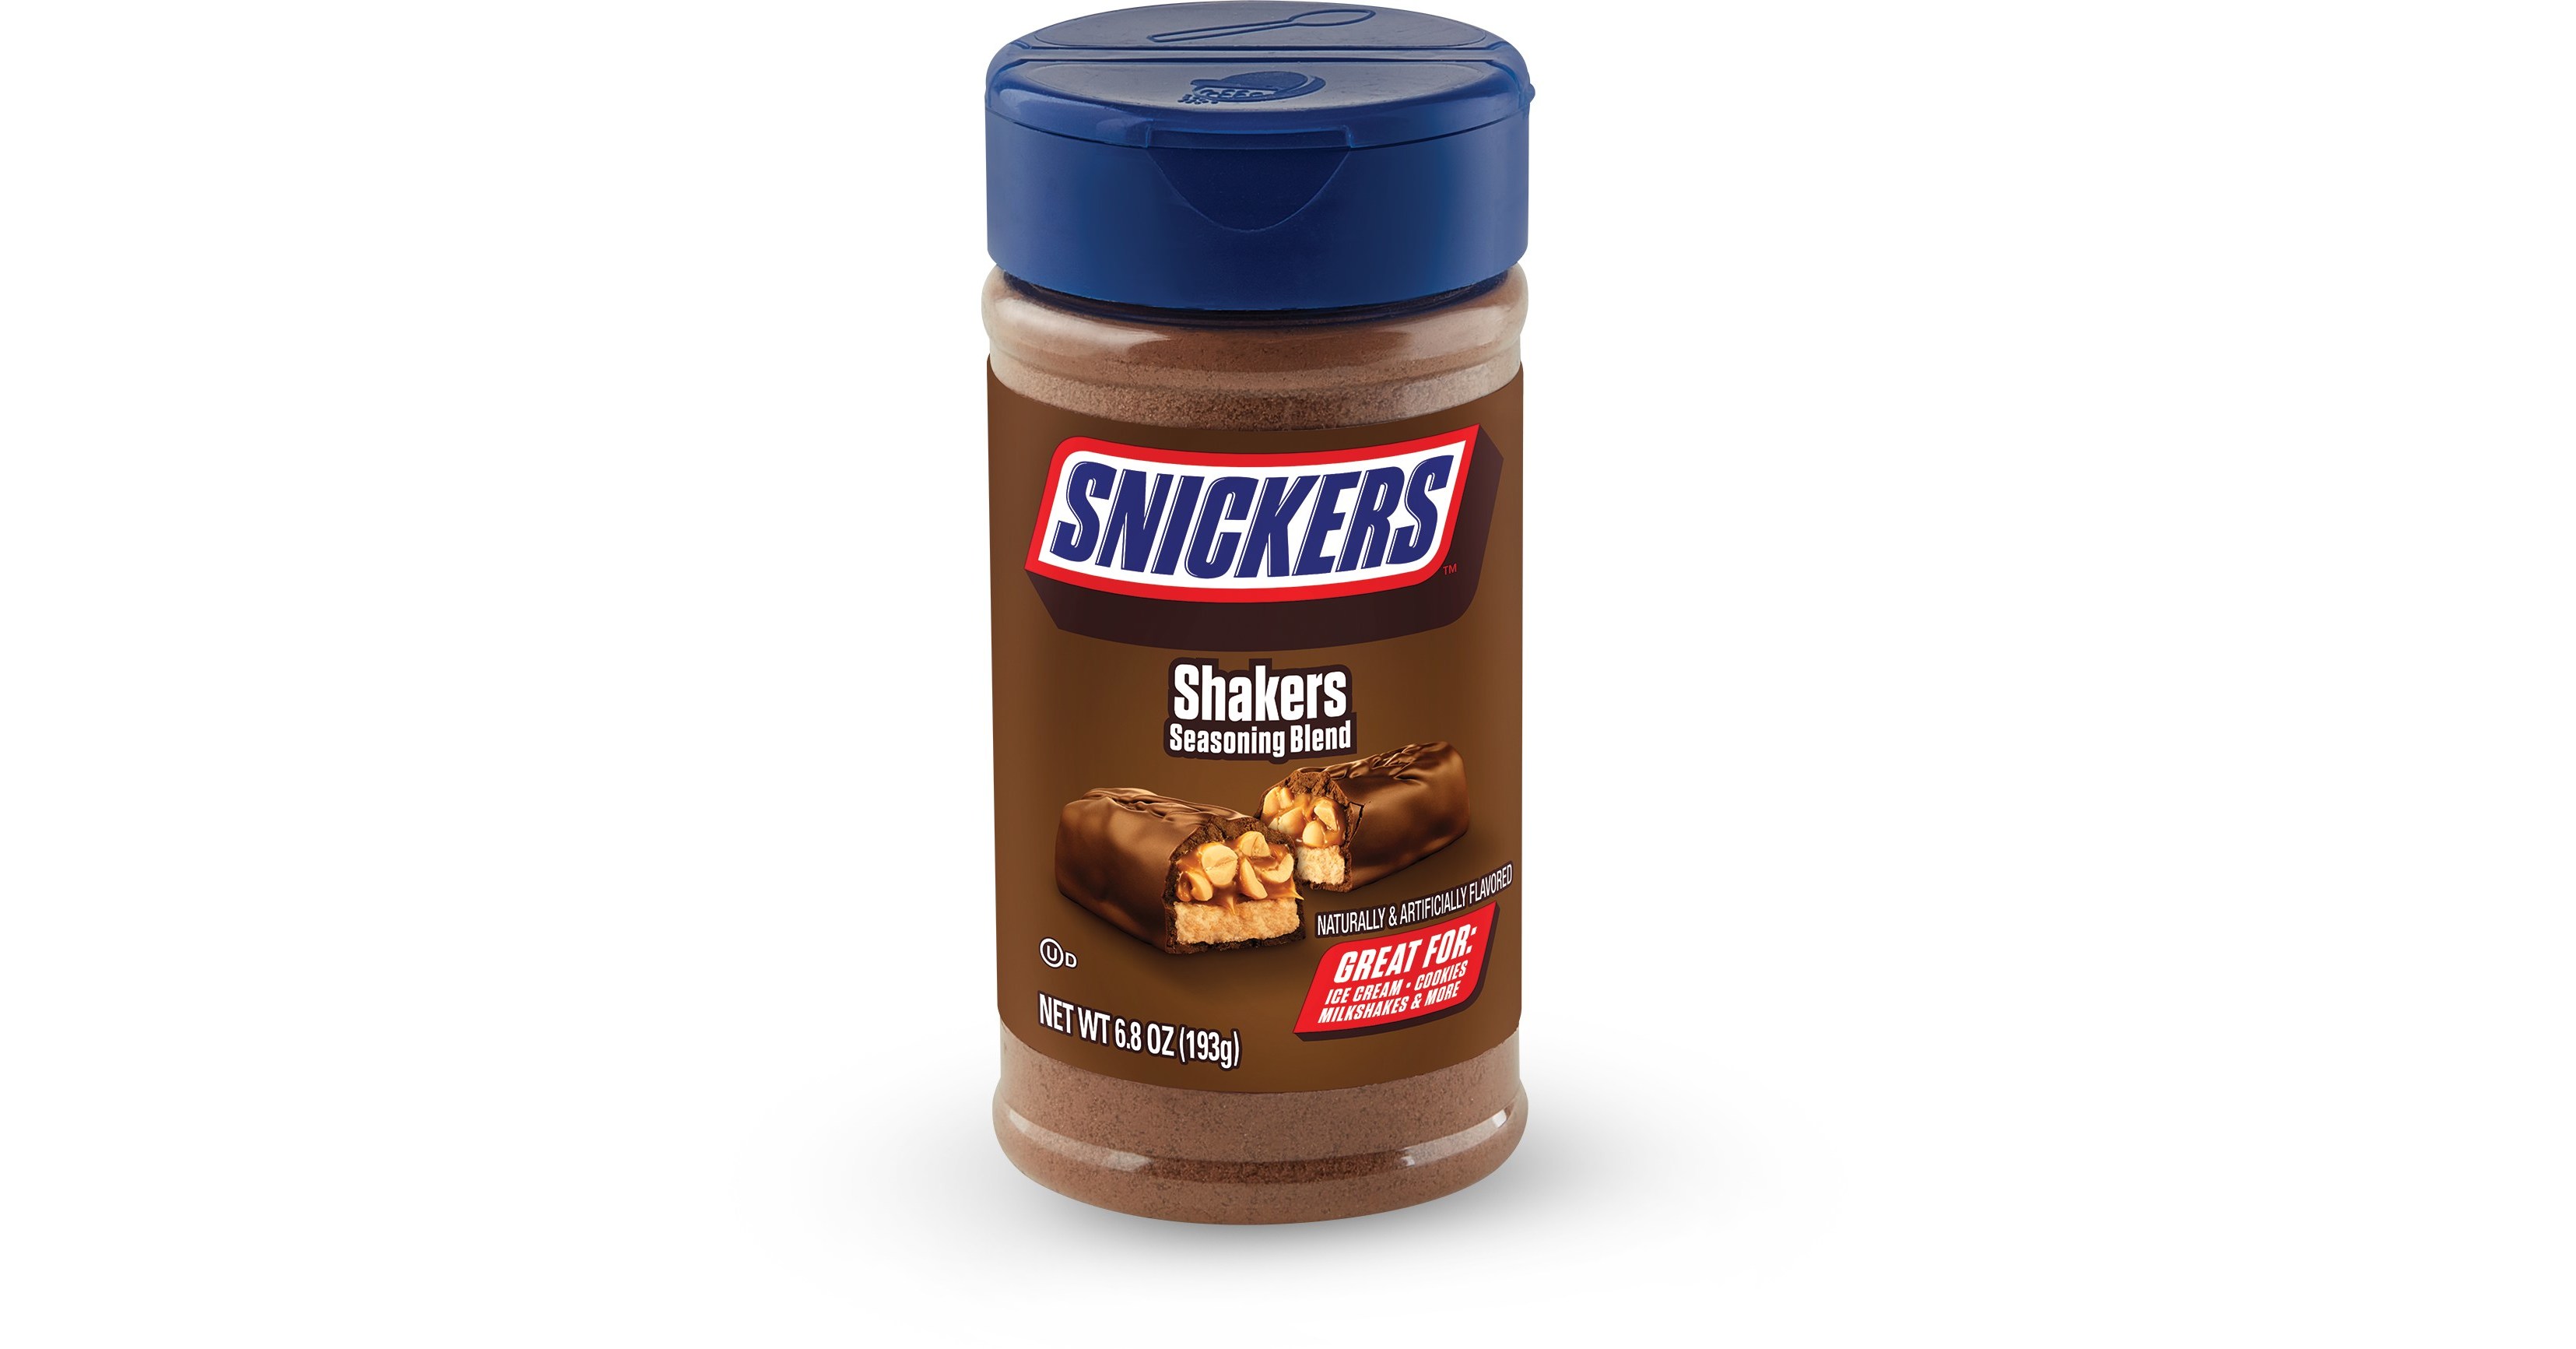 https://mma.prnewswire.com/media/1869671/Snickers_Shakers_1.jpg?p=facebook